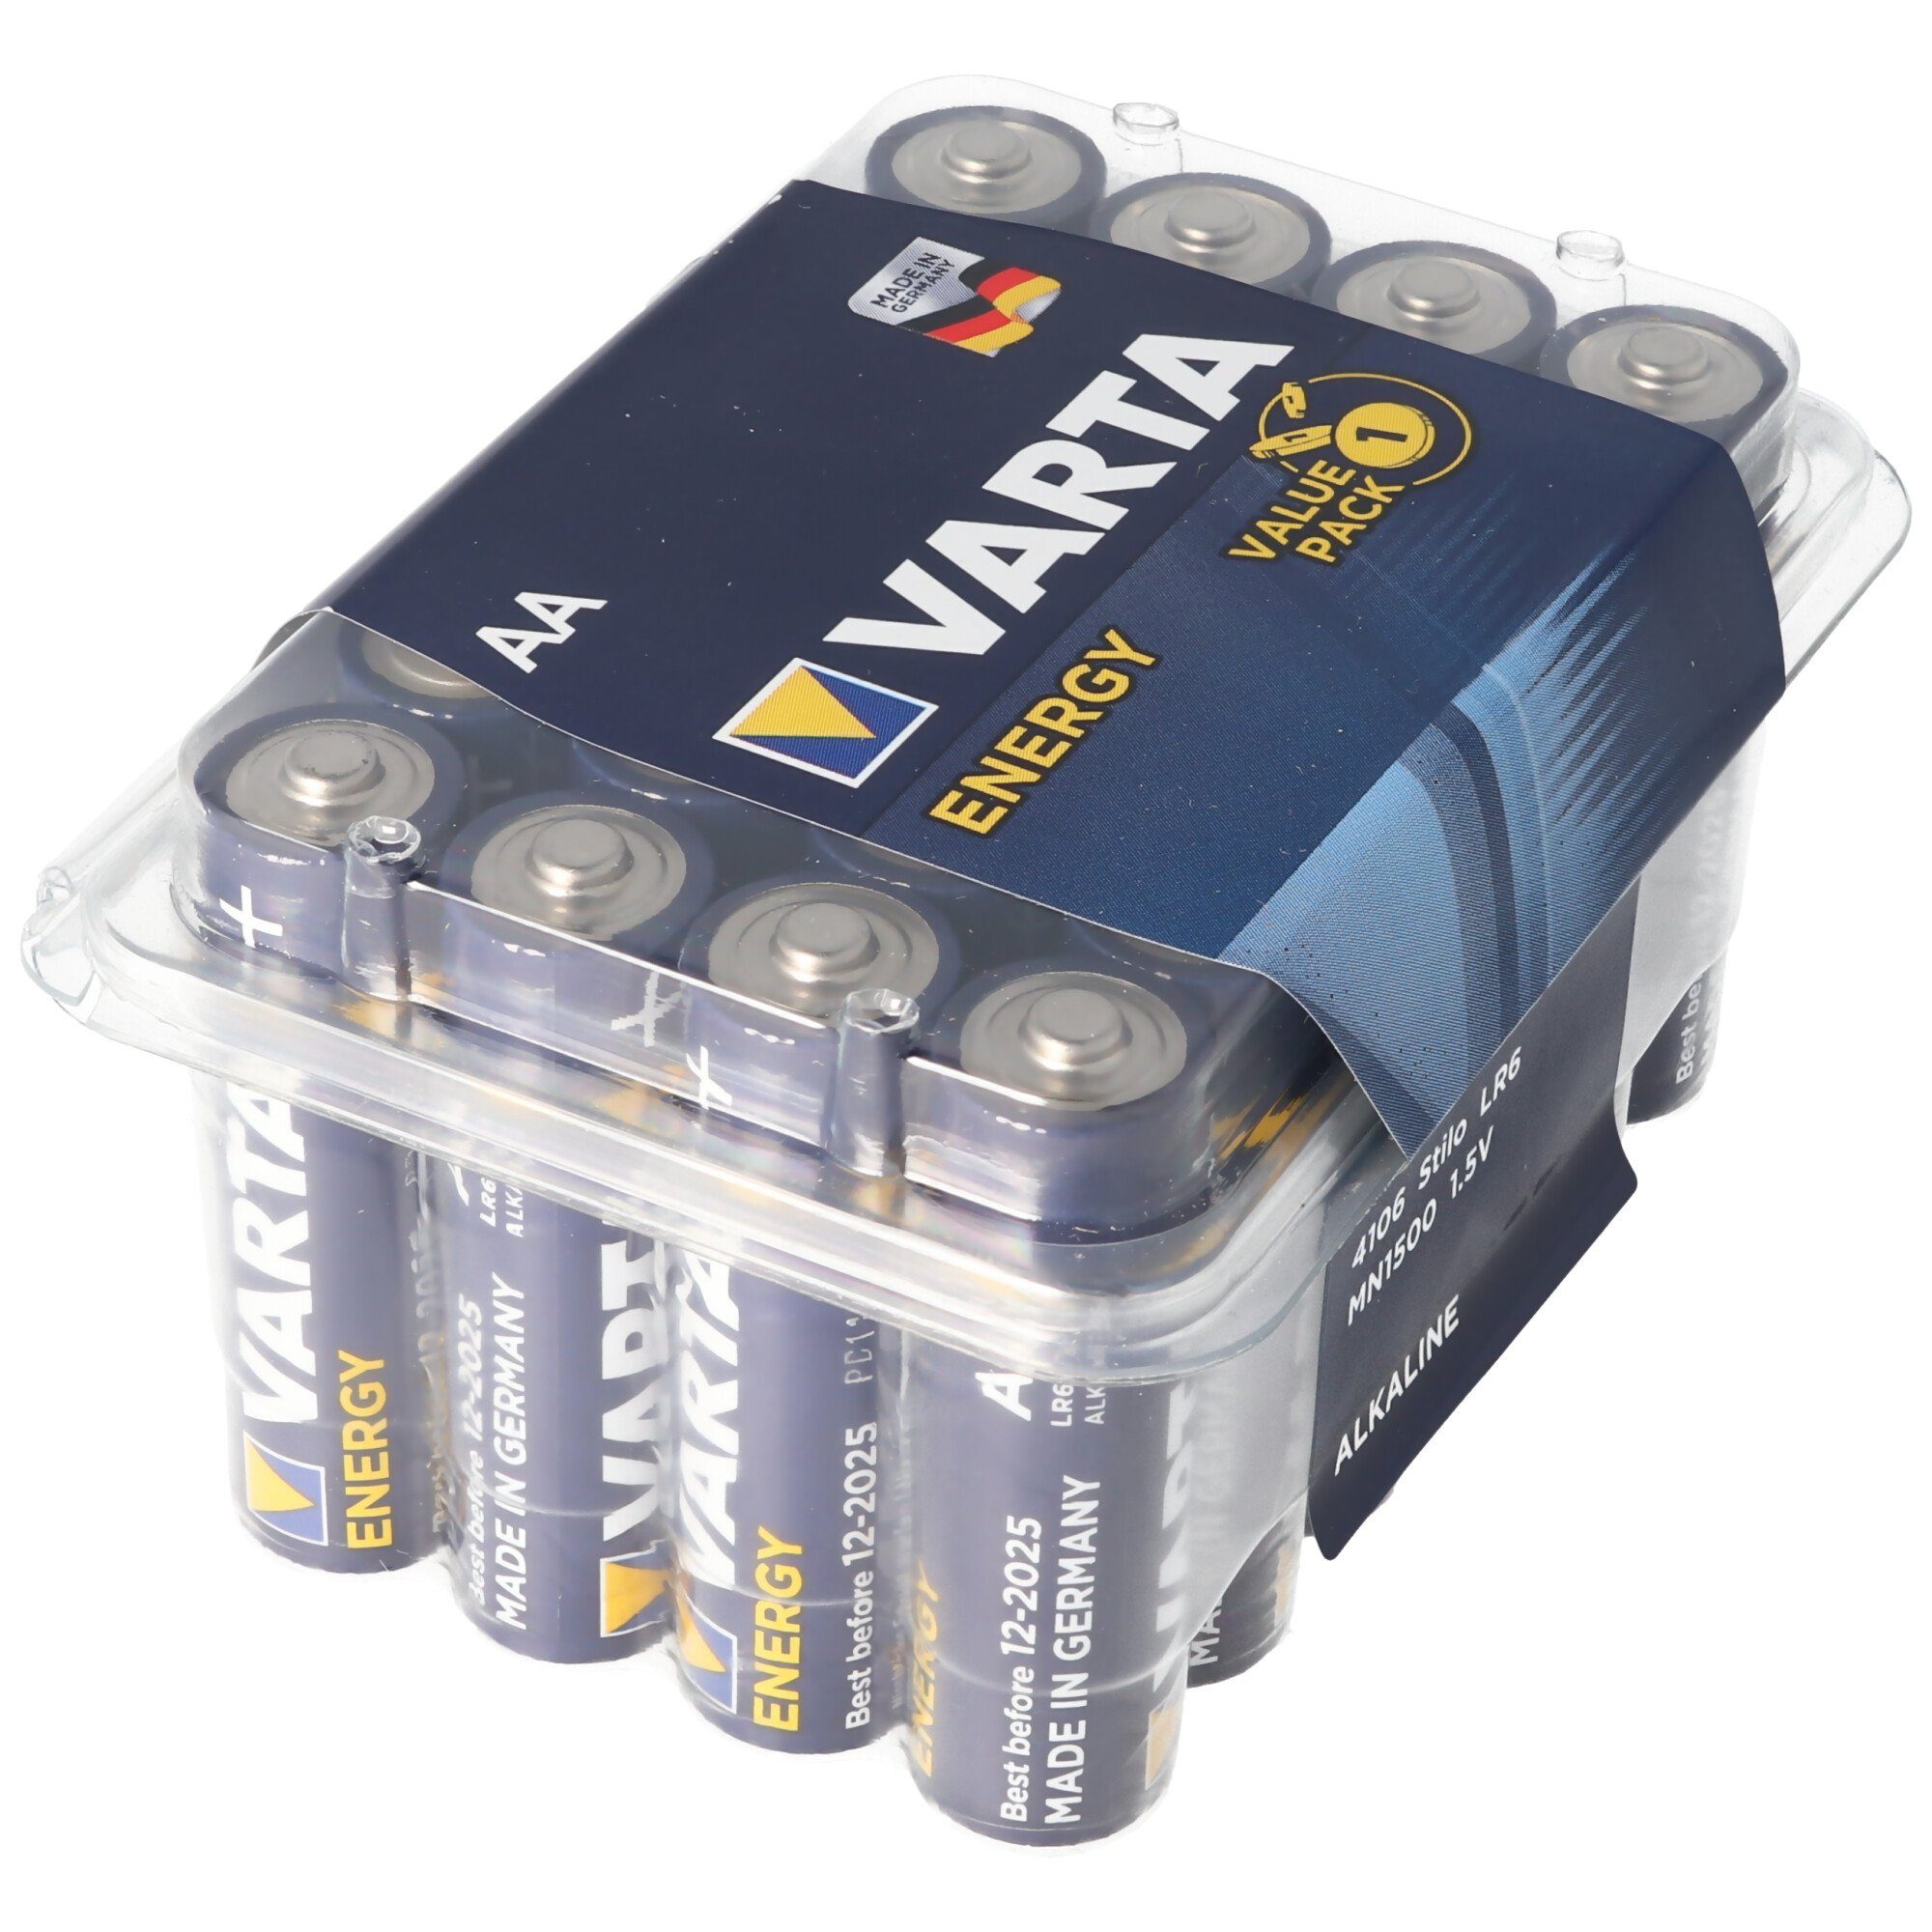 Stück AA inklusive VARTA (1,5 kostenloser Varta Batterie, 24 LR6 V) Batterie Mignon Aufbewahr